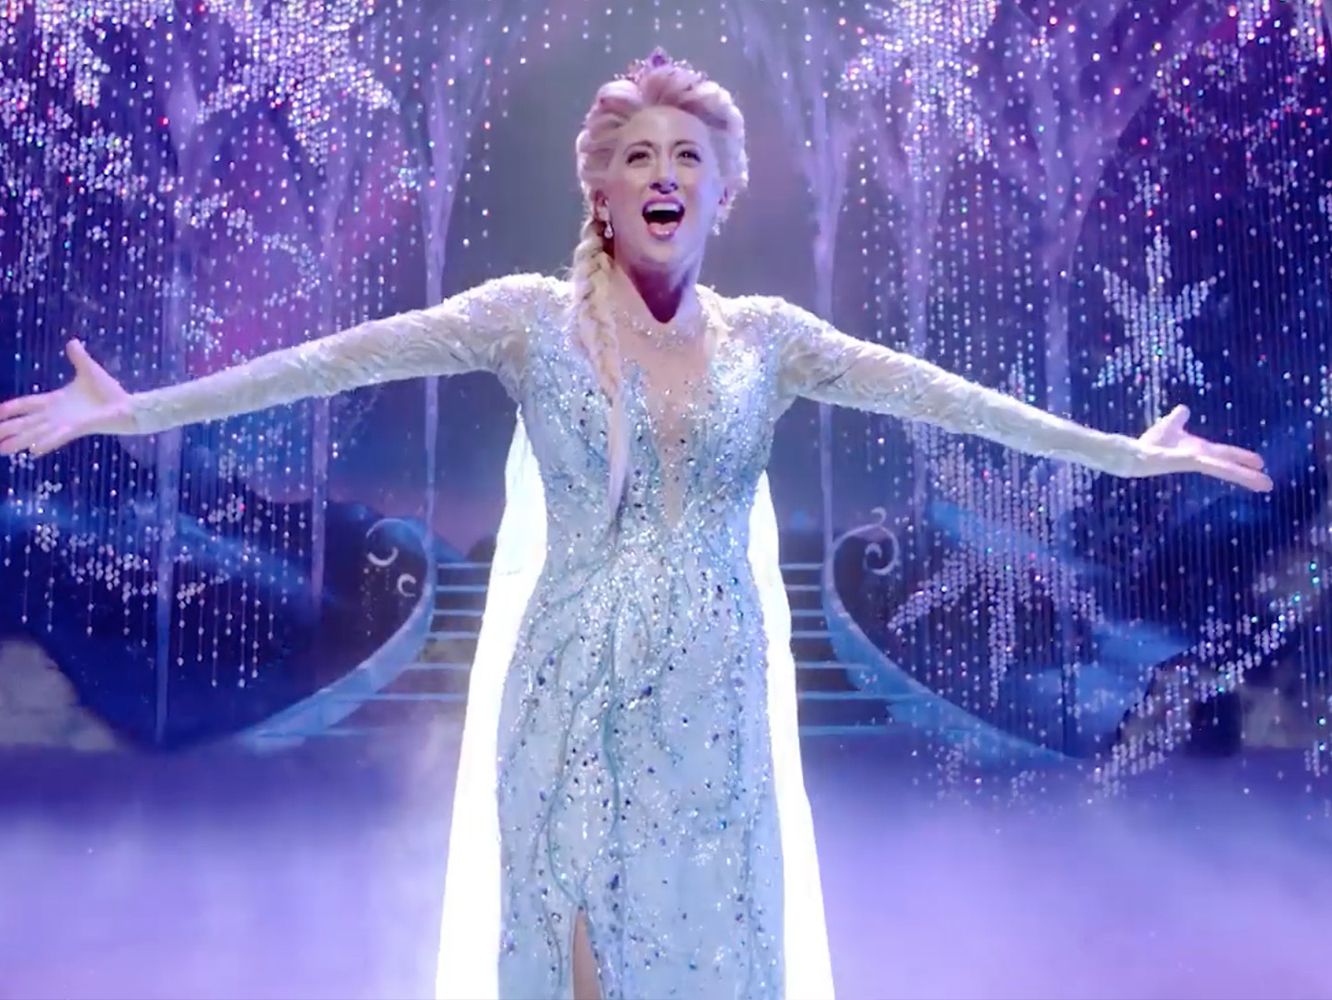 Fascinante tráiler para ‘Frozen’, que llega como musical a los teatros de Broadway